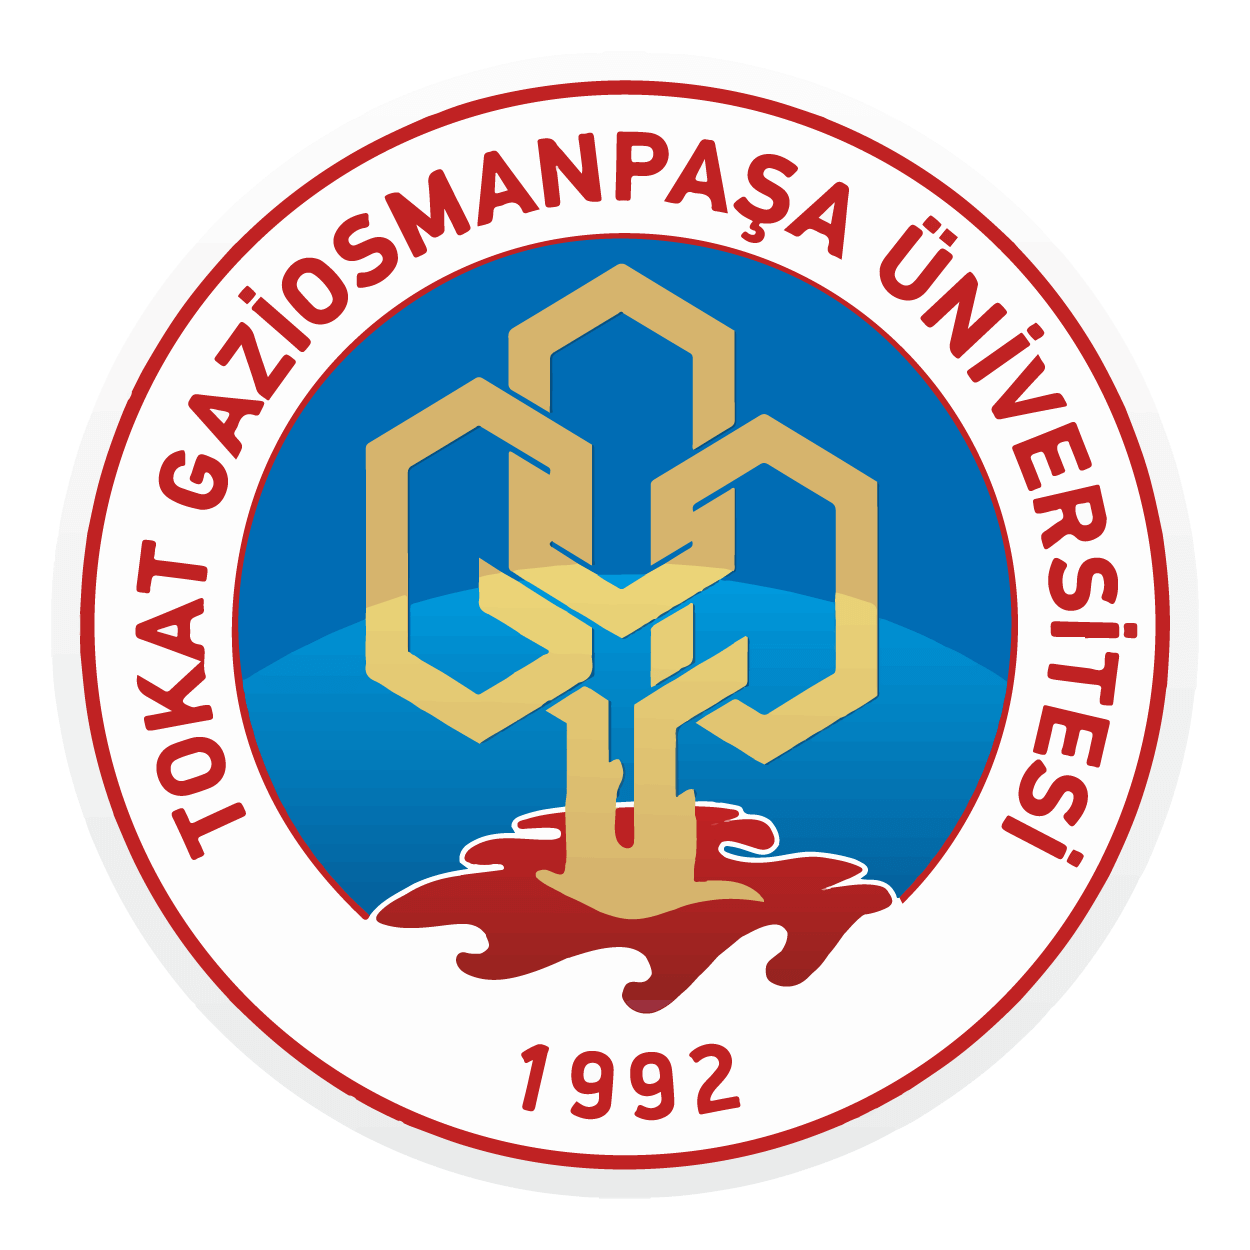 Tokat Gaziosmanpaşa Üniversitesi Logo png